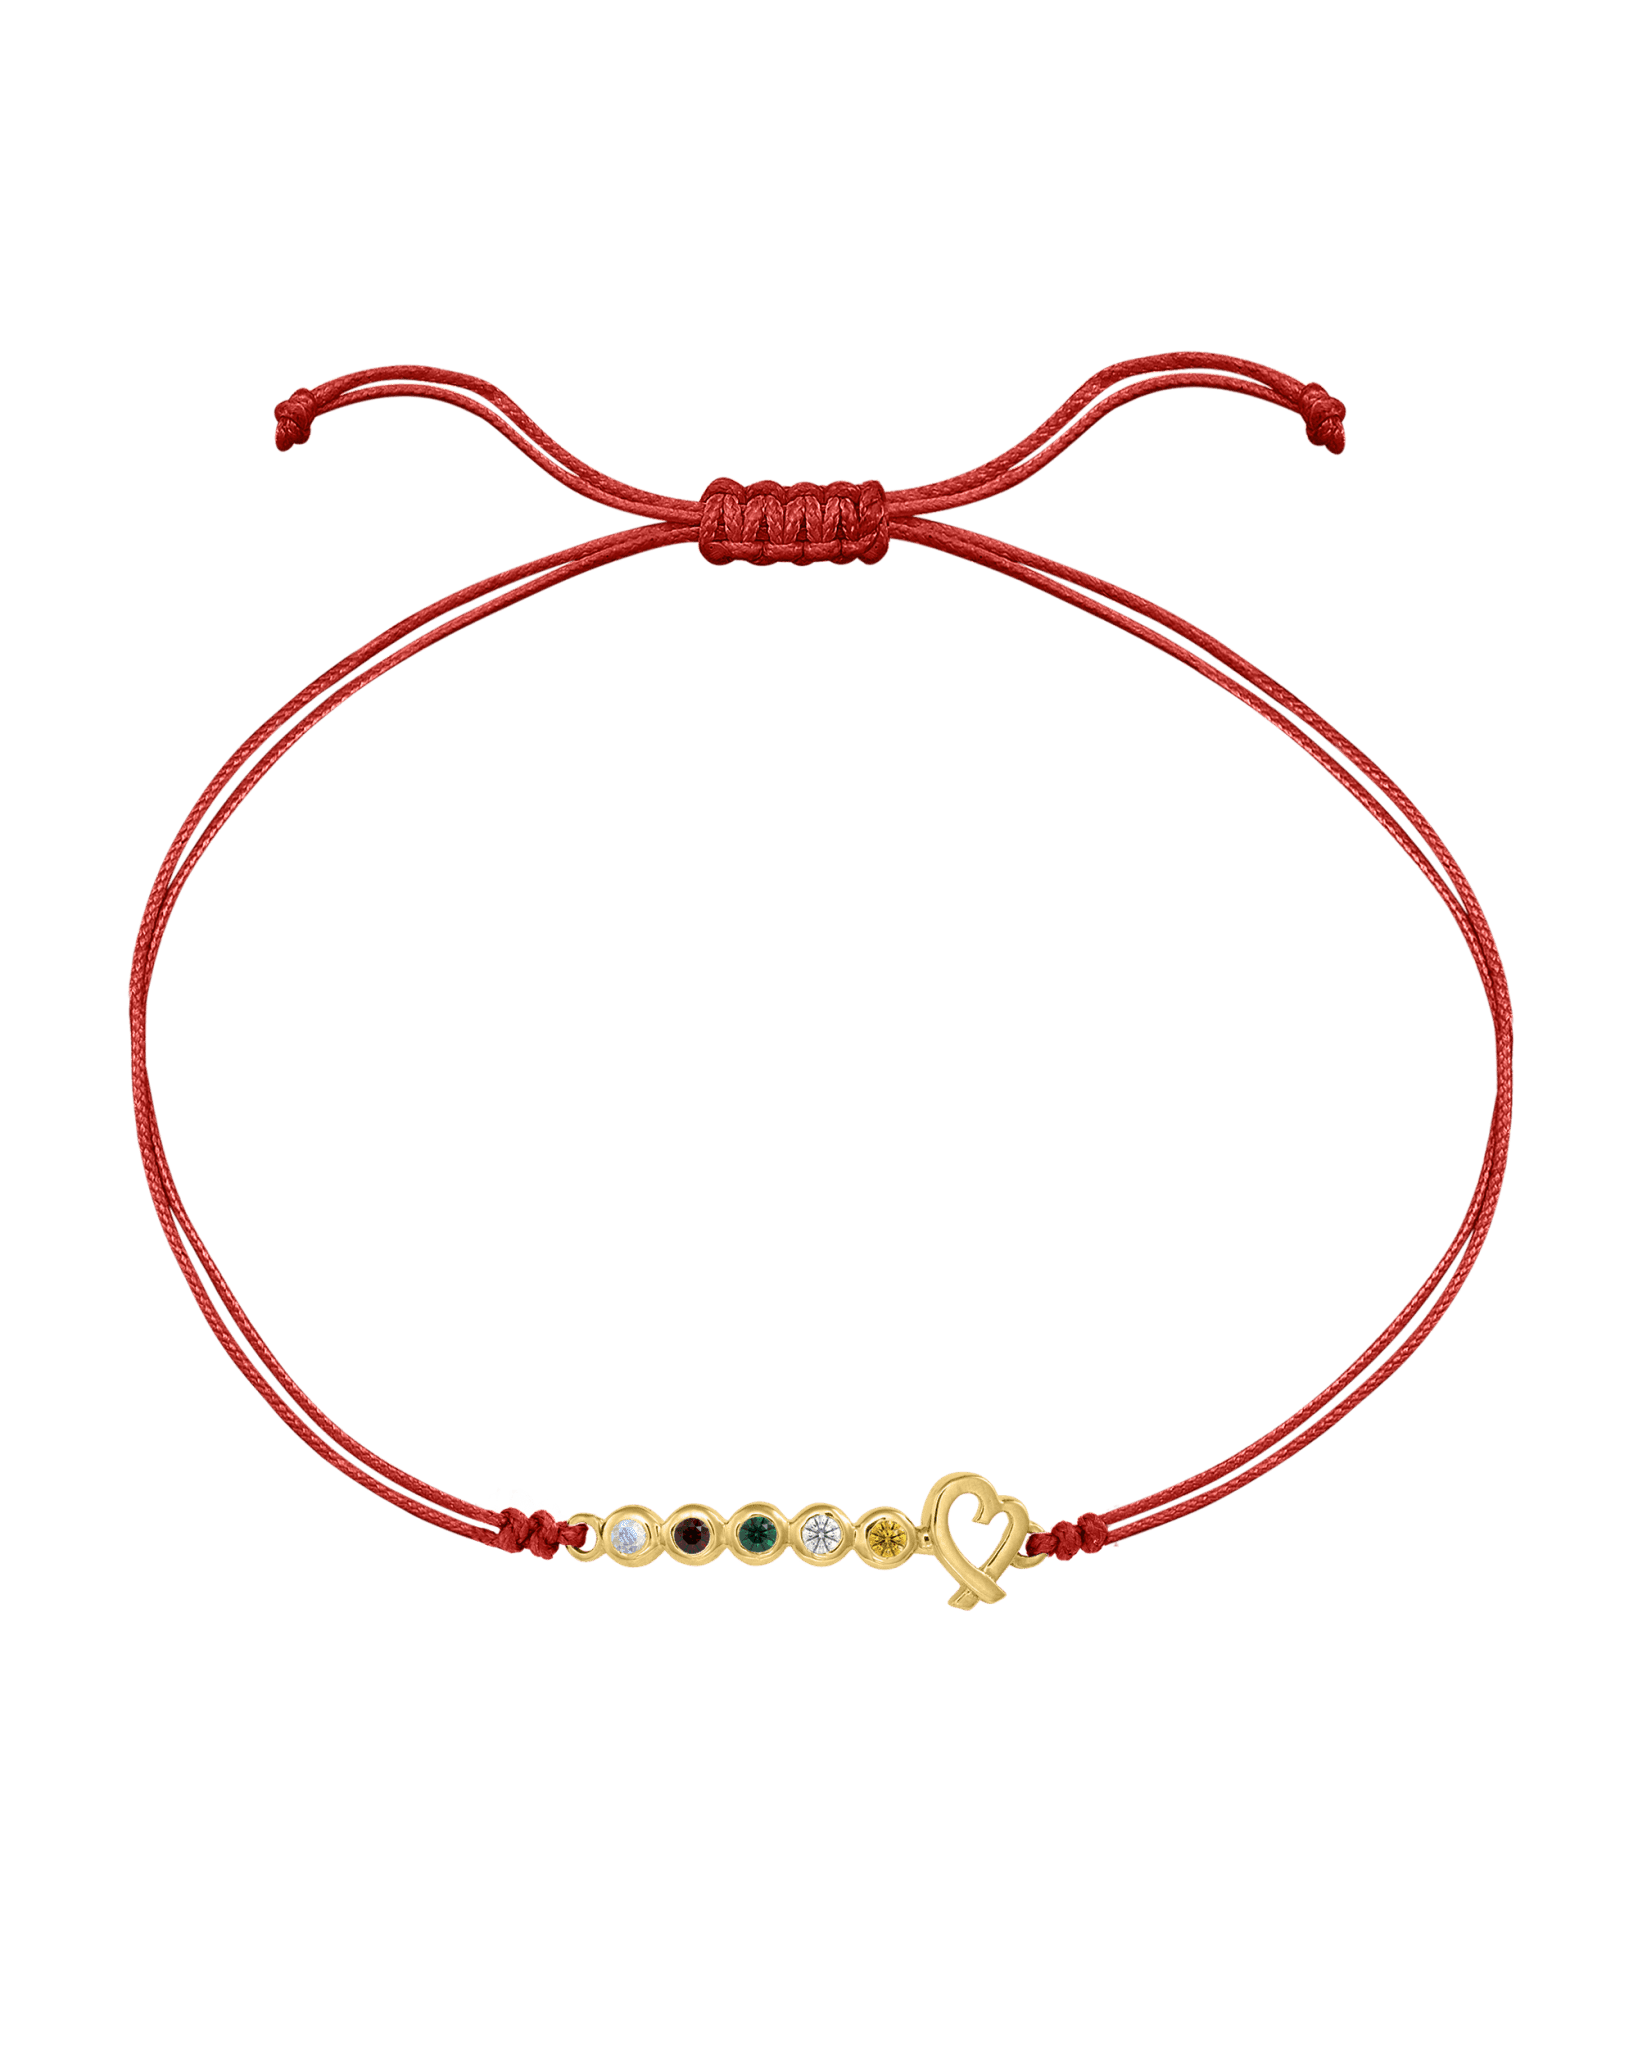 Birthstone Bar Heart Bracelet - 14K Yellow Gold Bracelets 14K Solid Gold Red 2 